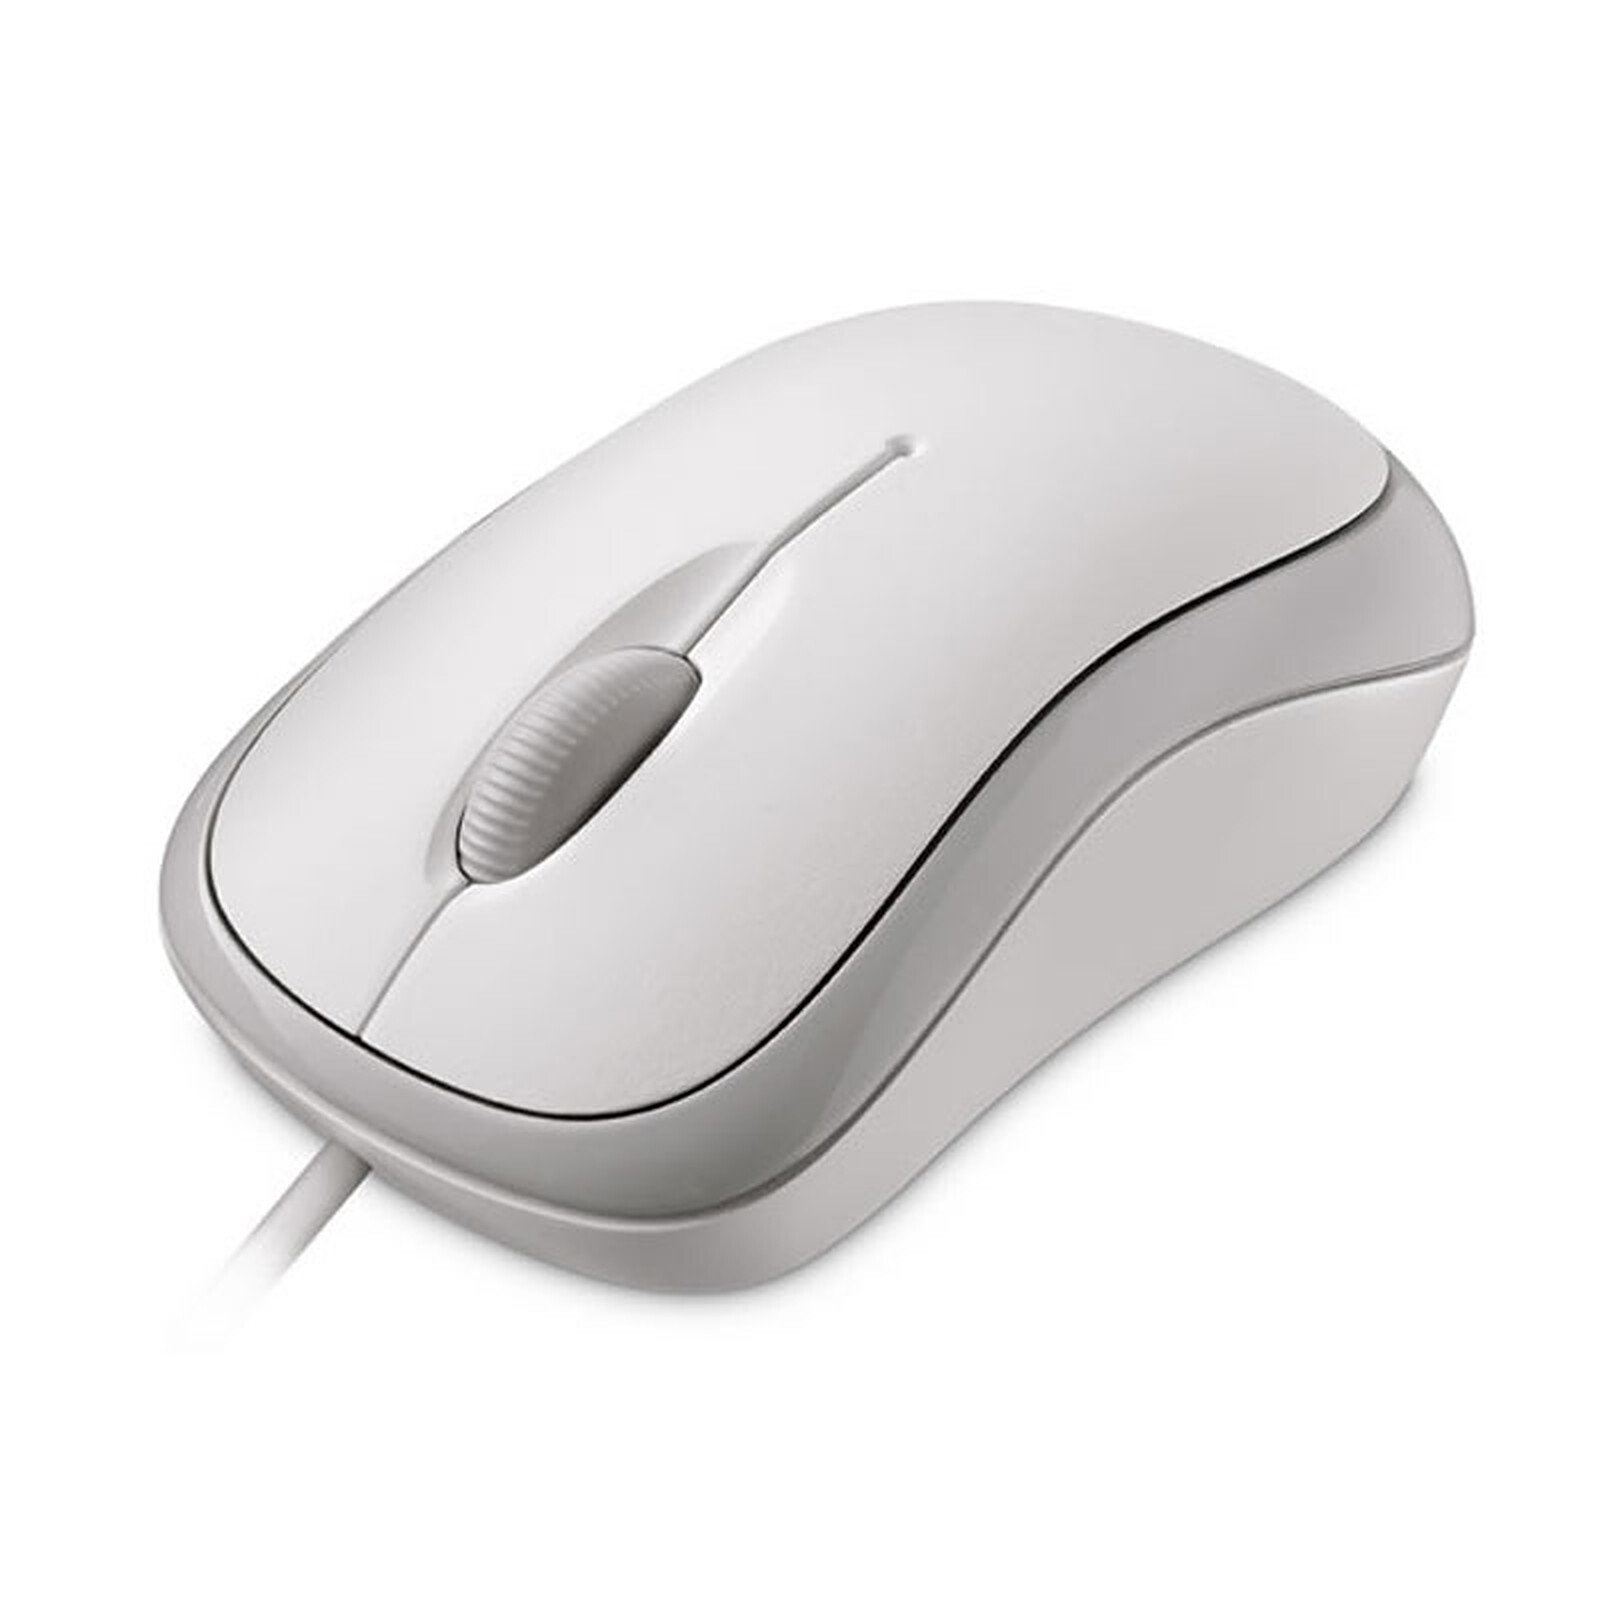 Microsoft L2 Basic Optical Mouse Blanche - Souris PC - Garantie 3